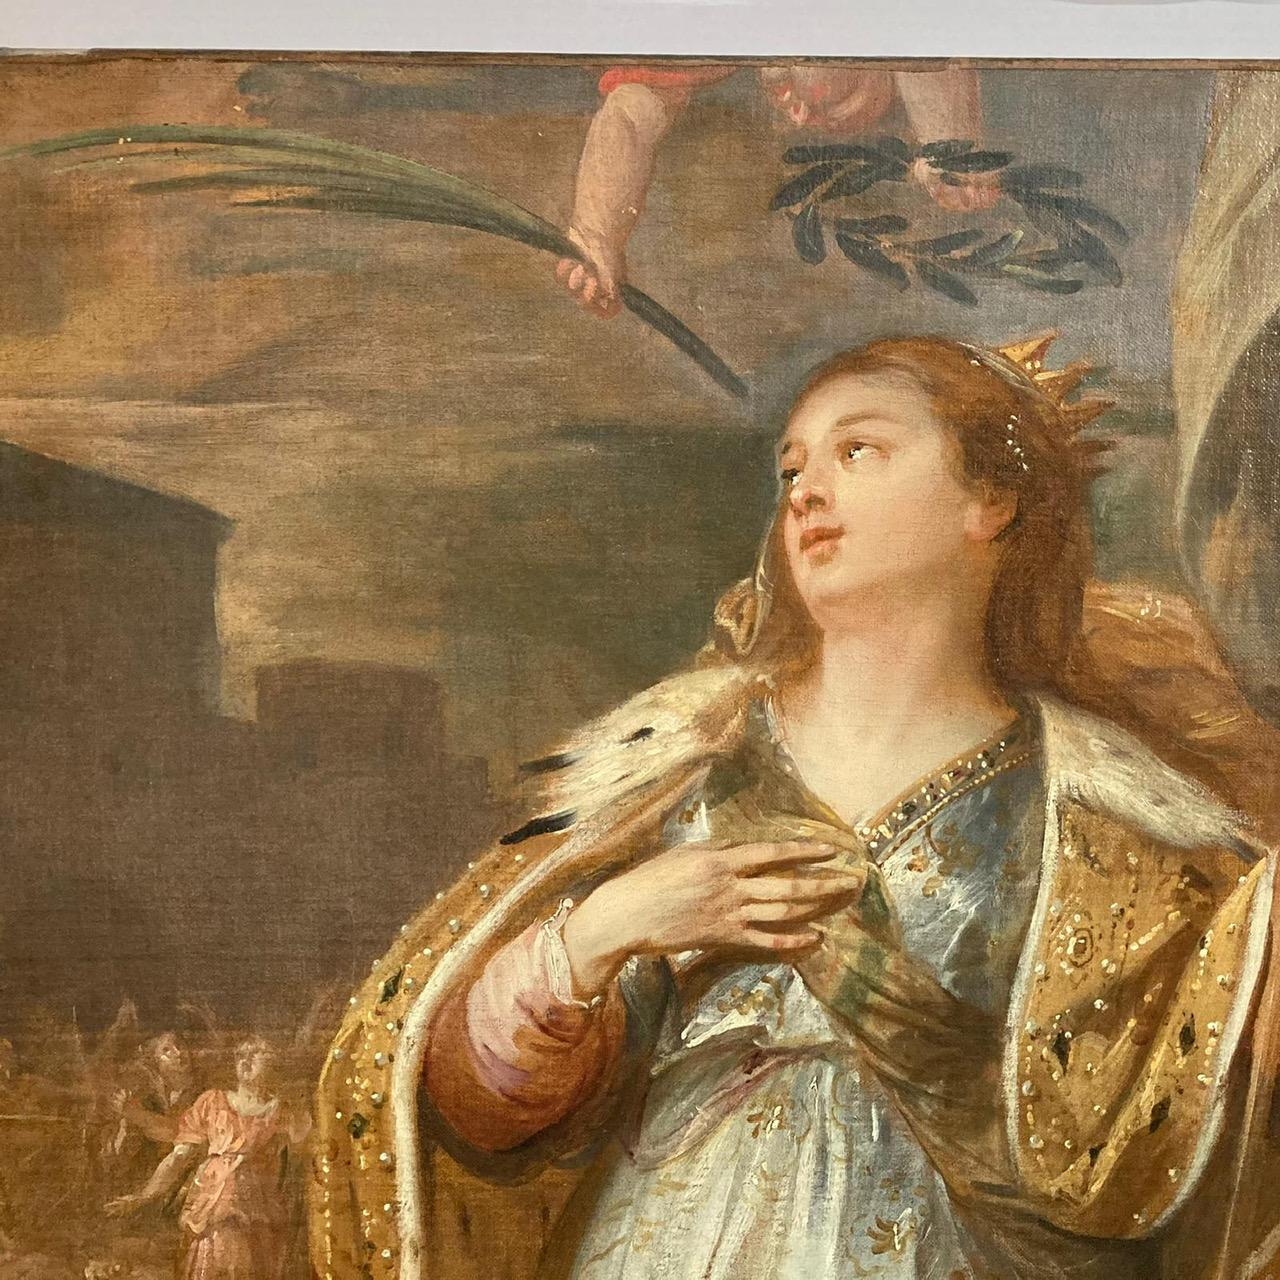 Boeckhorst, Rubens, Saint Ursula, Decorative Old Master, Woman, Baroque, Flemish - Painting by Jan Boeckhorst